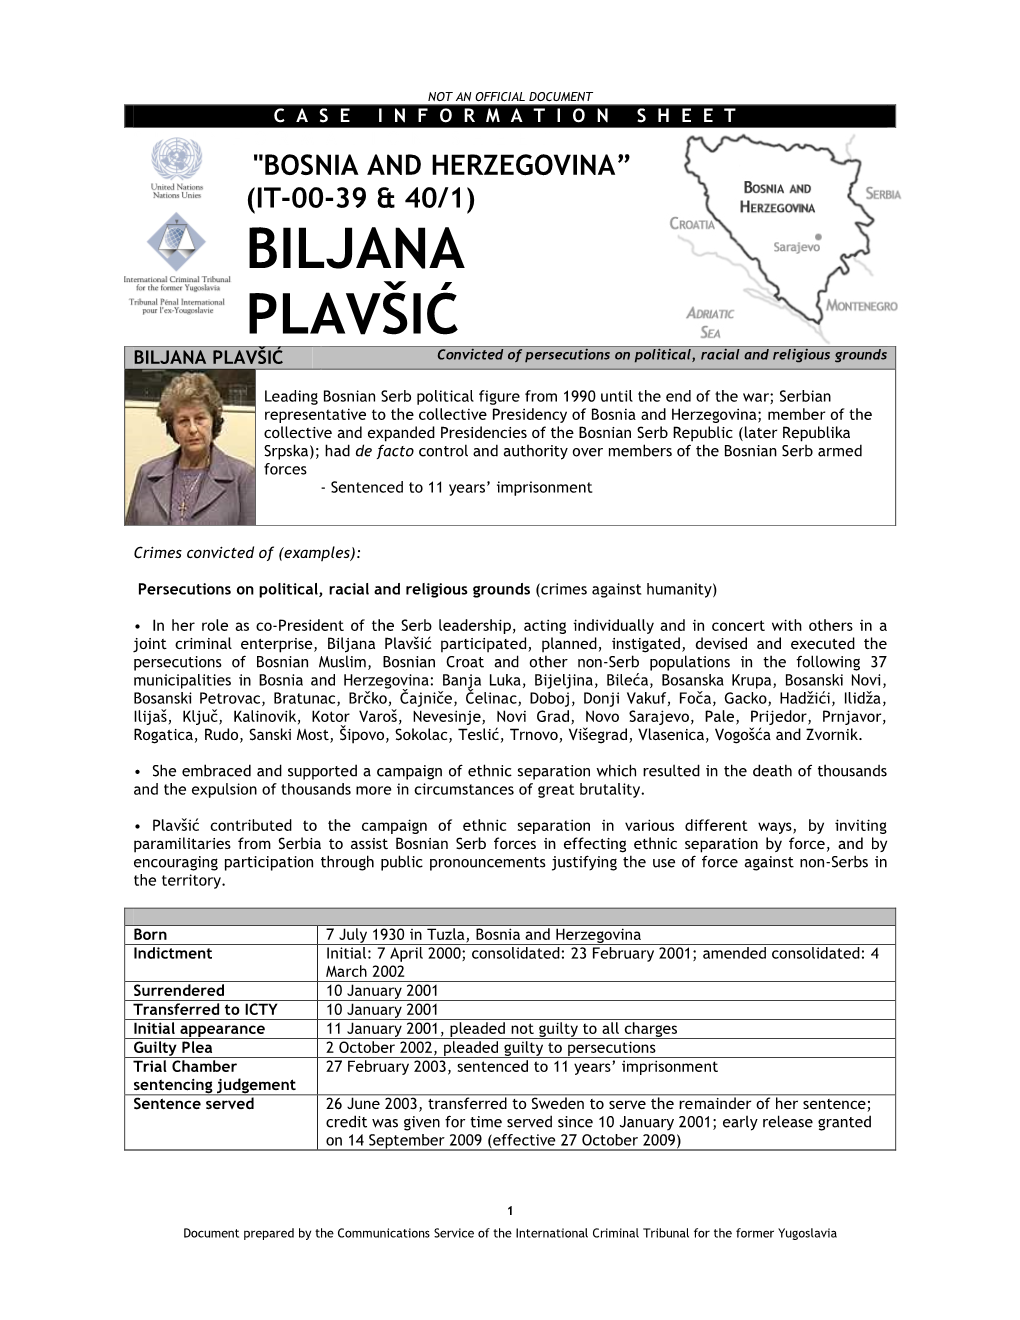 Biljana Plavšić Case Information Sheet